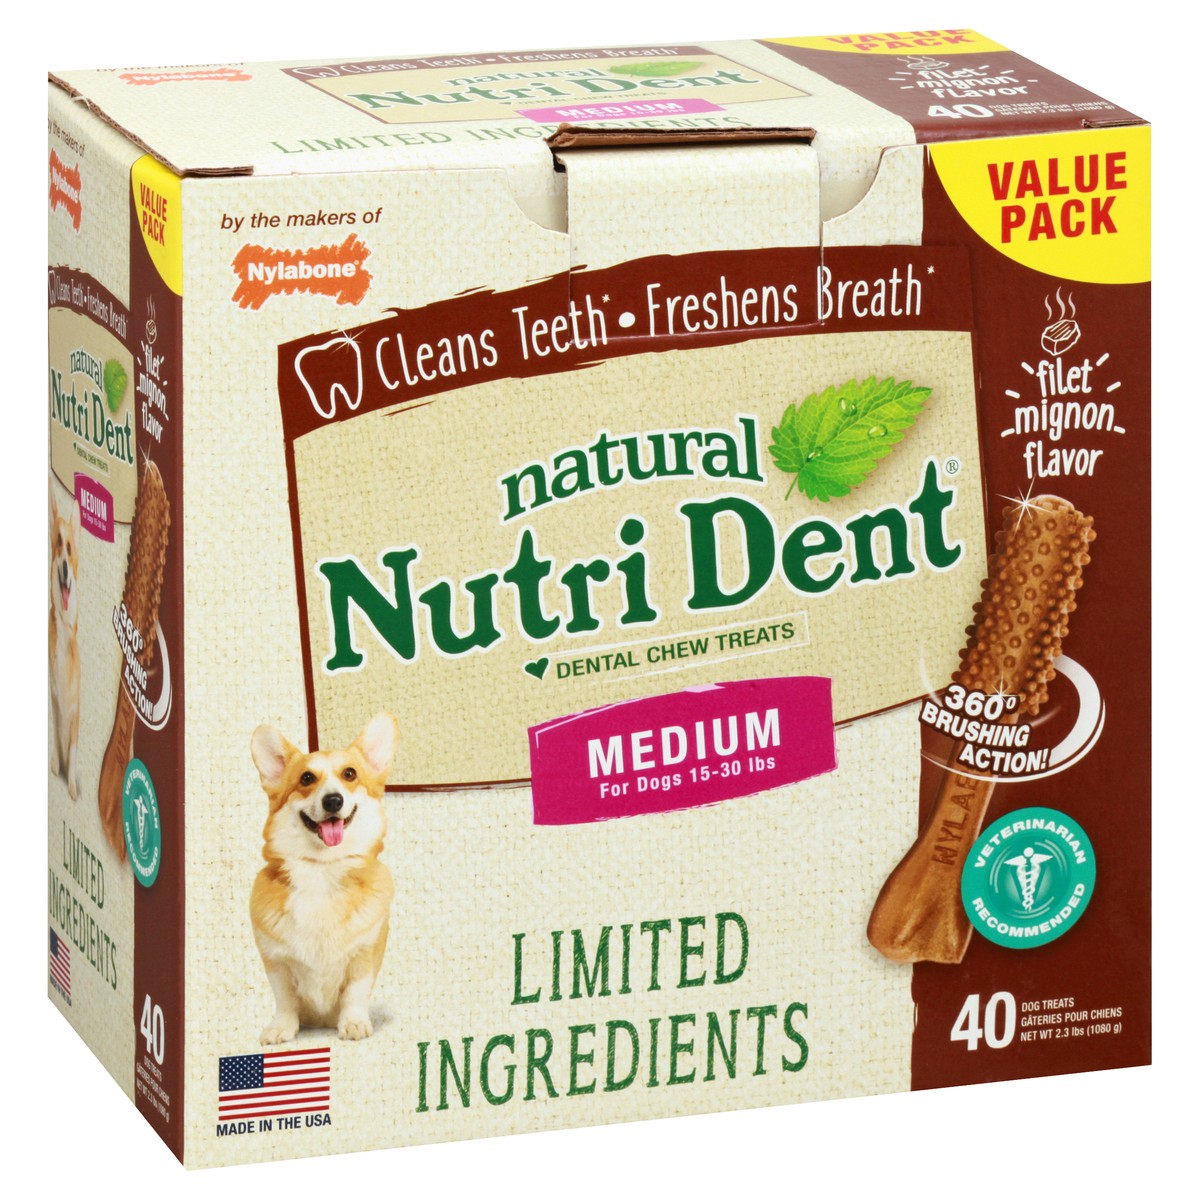 slide 1 of 9, Nutri Dent Value Pack Medium Filet Mignon Flavor Dental Chew Treats 40 ea, 40 ct